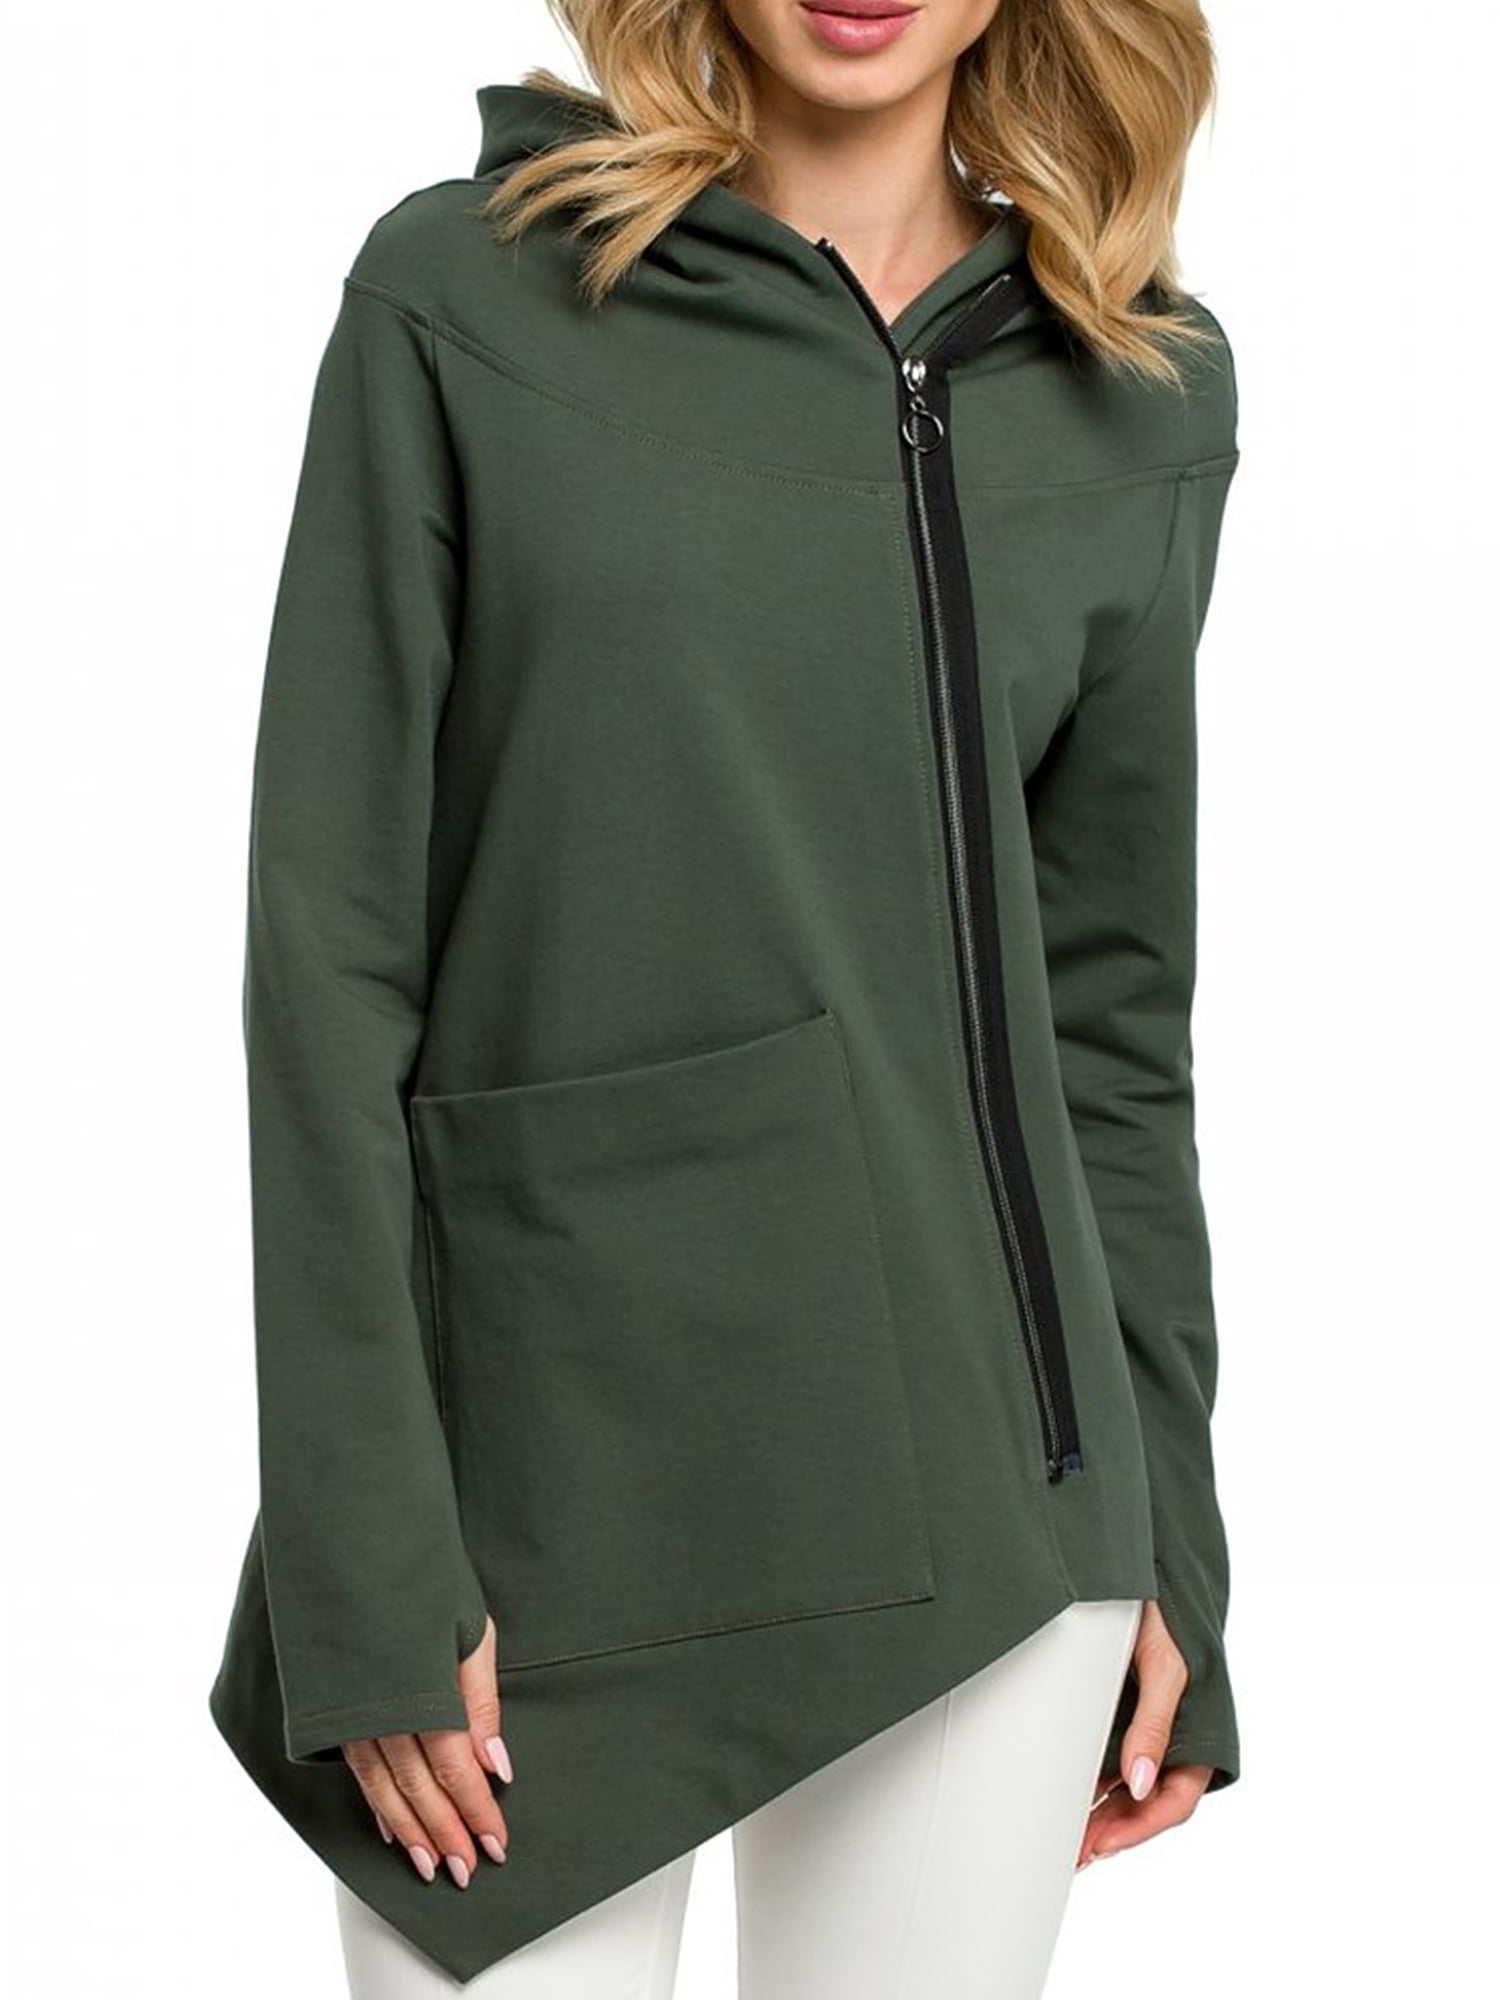 Women Hoodies Coat Jacket Sweatshirt Pullover Jumper Casual Hooded Top Plus Size 